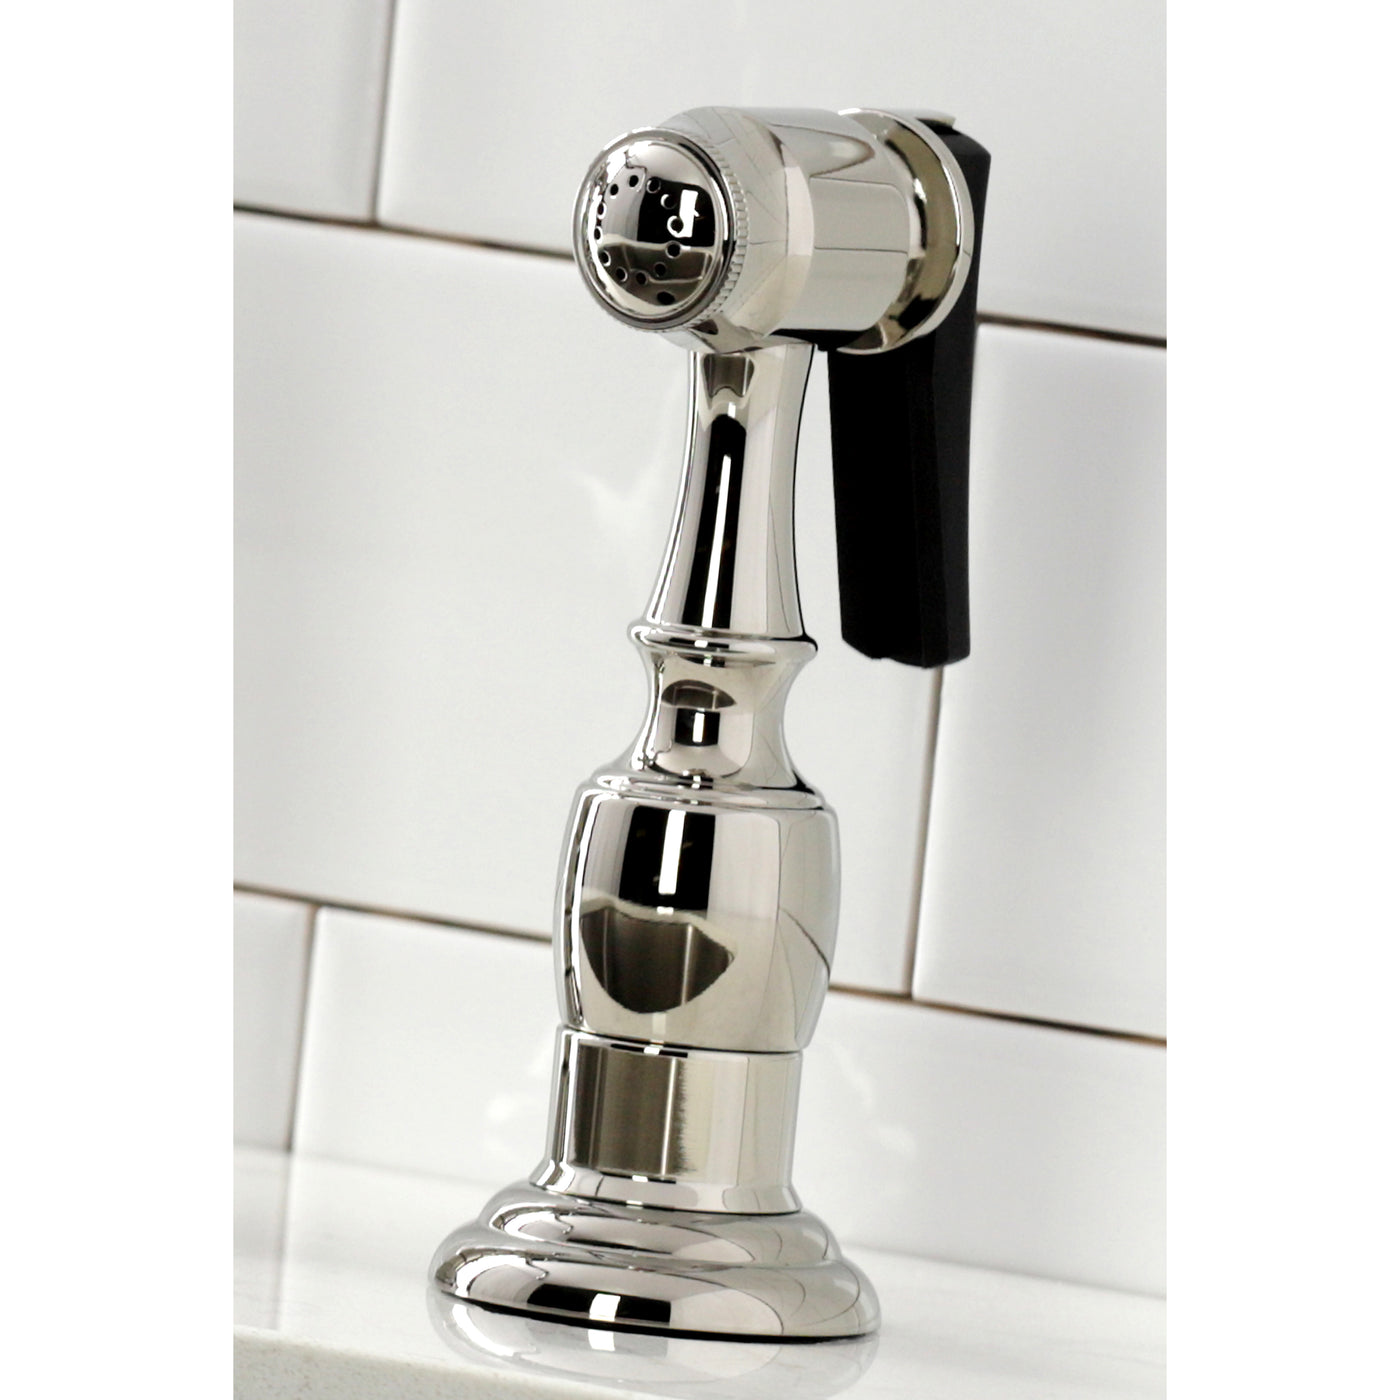 Elements of Design ES1276ALBS Bridge Kitchen Faucet with Brass Sprayer, Polished Nickel